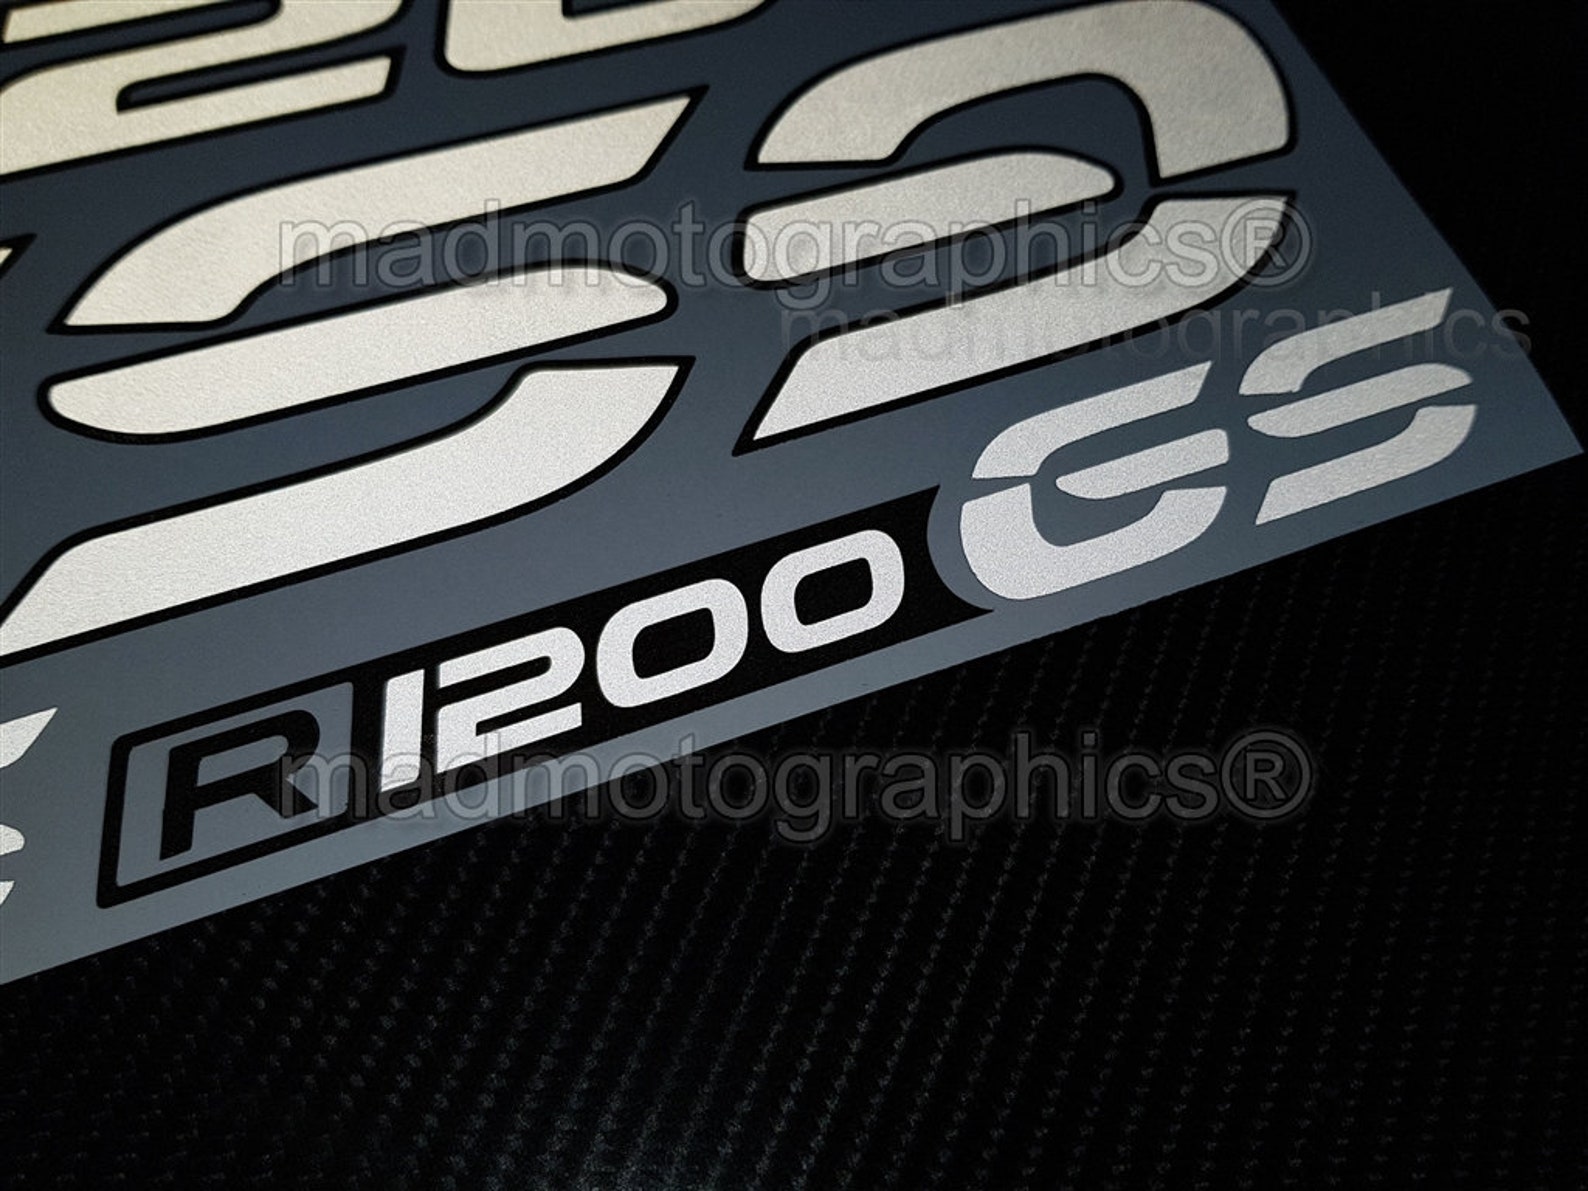 R1200GS BMW motorcycle motorrad reflective stickers set | Etsy